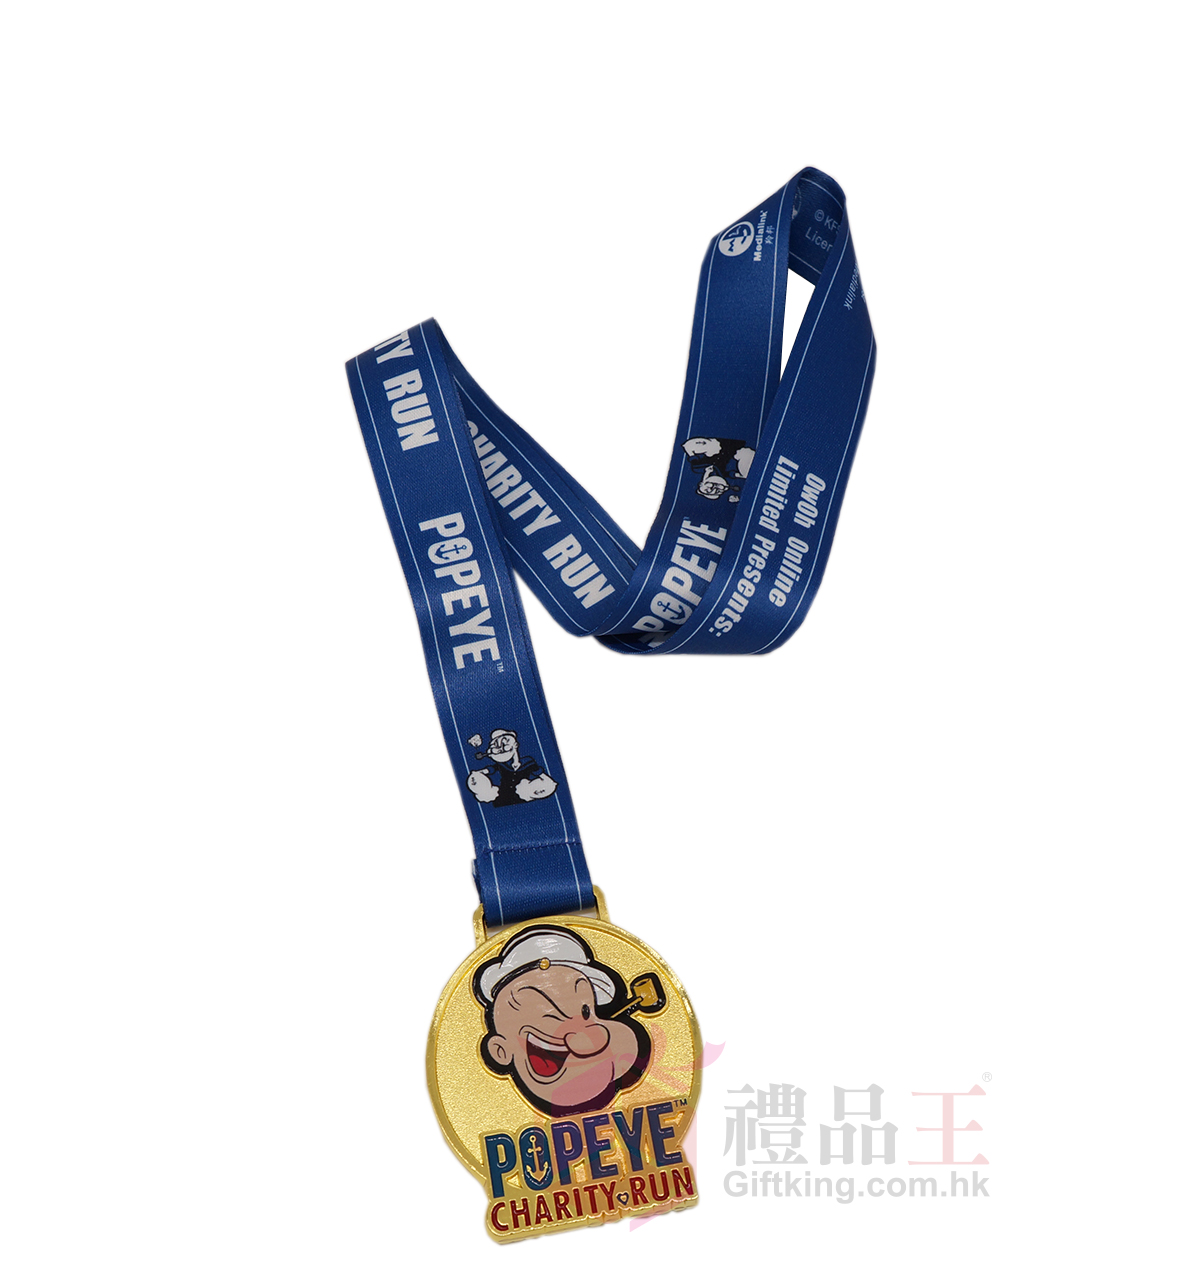 PopEye Charity Run Medal (Souvenir Gift)